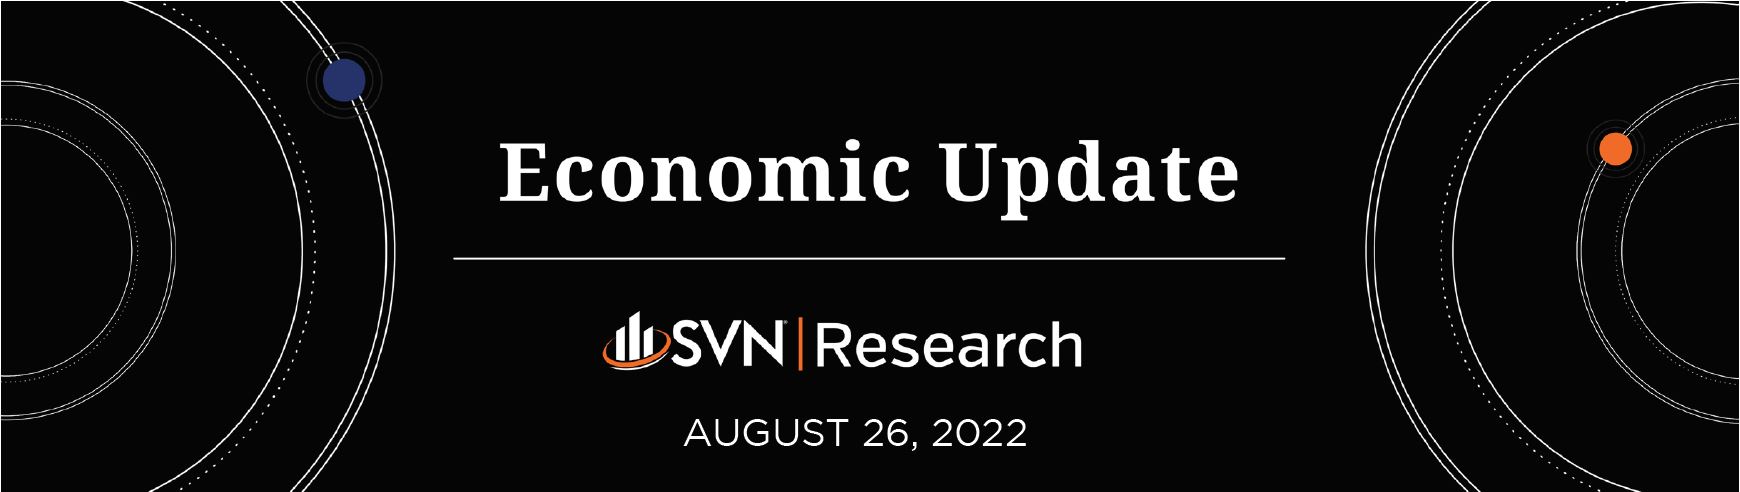 SVN | Research Economic Update 8.26.2022